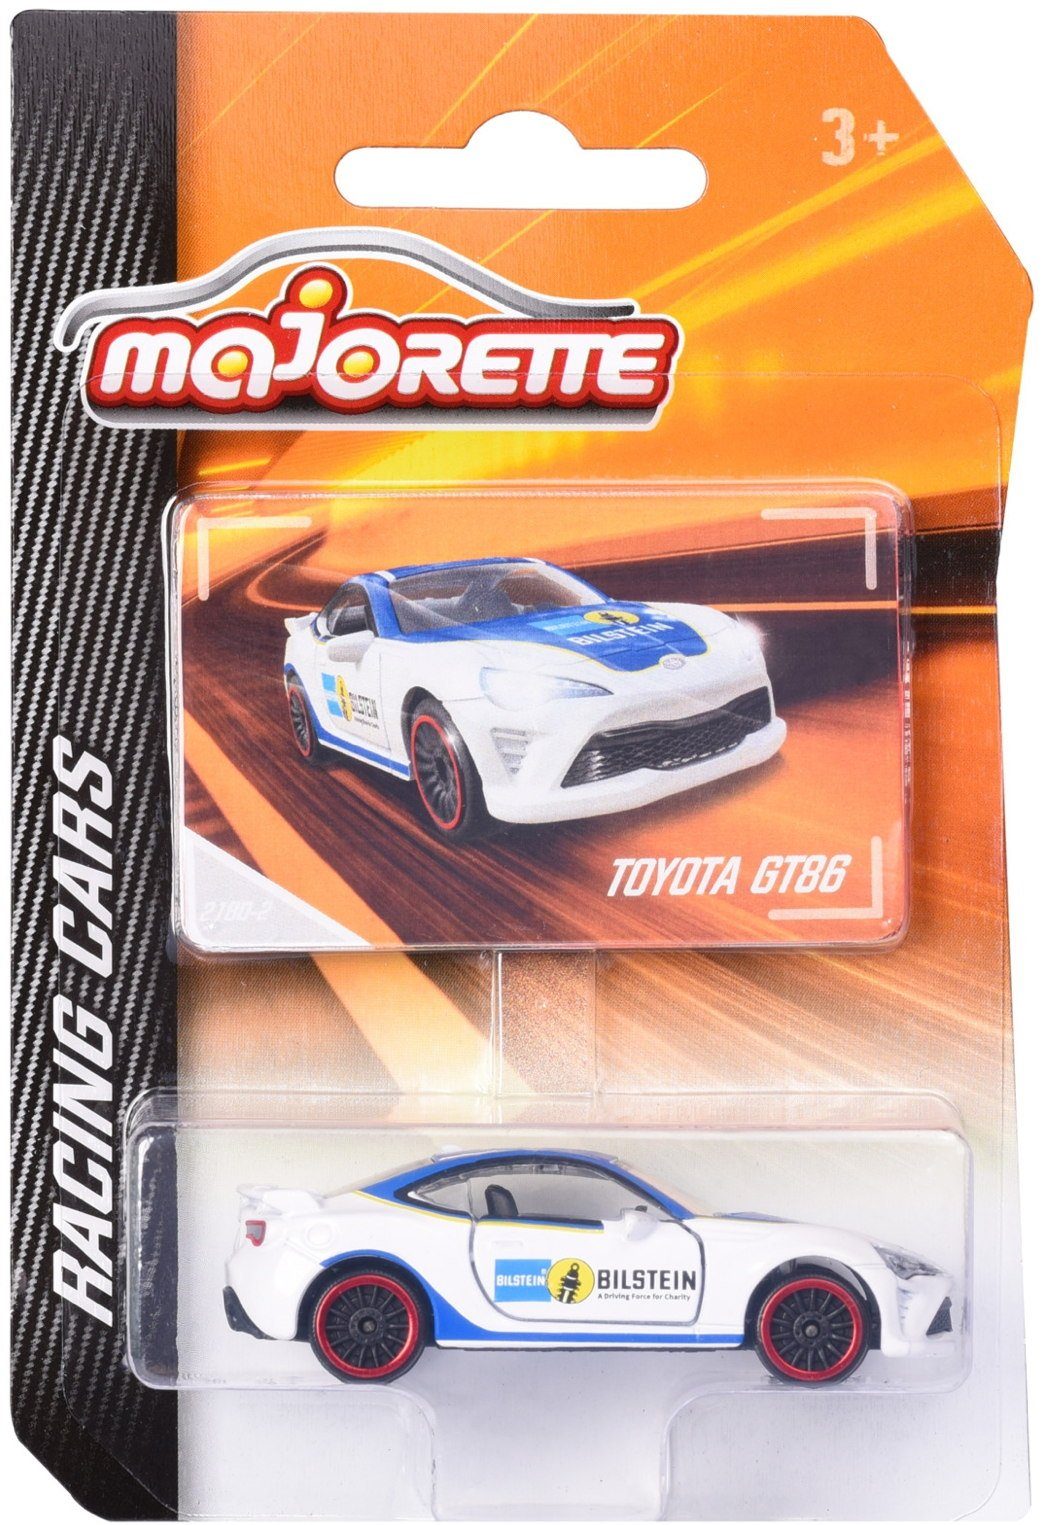 Toyota 212084009Q31 Cars Bilstein majORETTE Spielzeug-Auto Racing GT86 Spielzeugauto